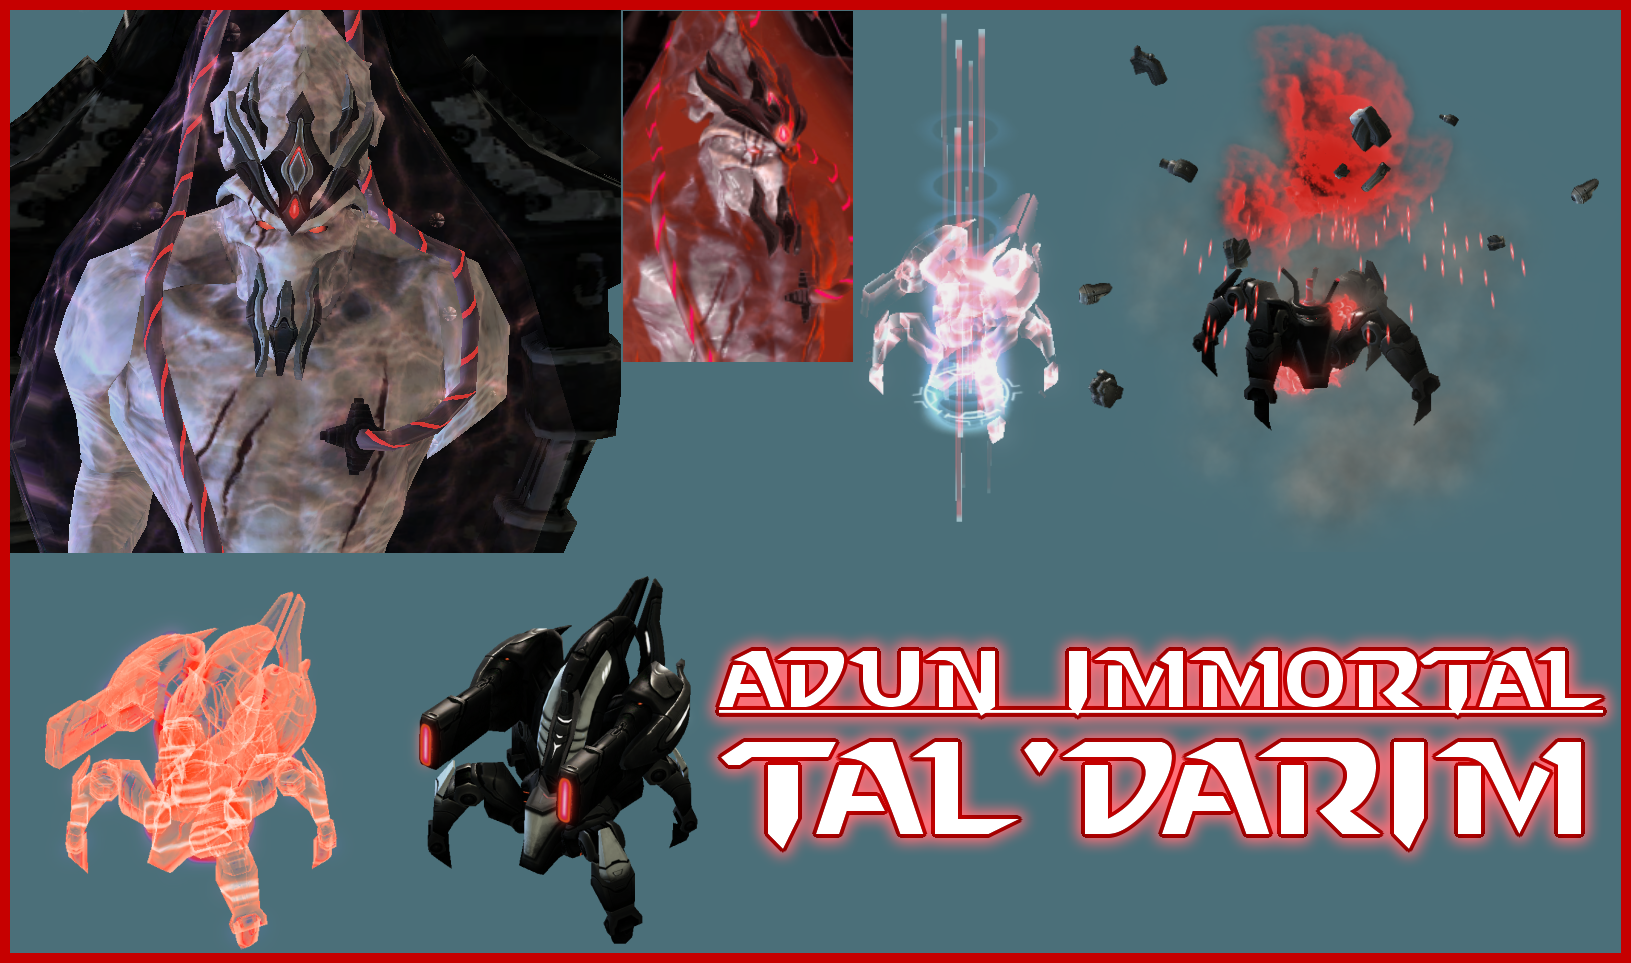 Adun Immortal - Tal'darim